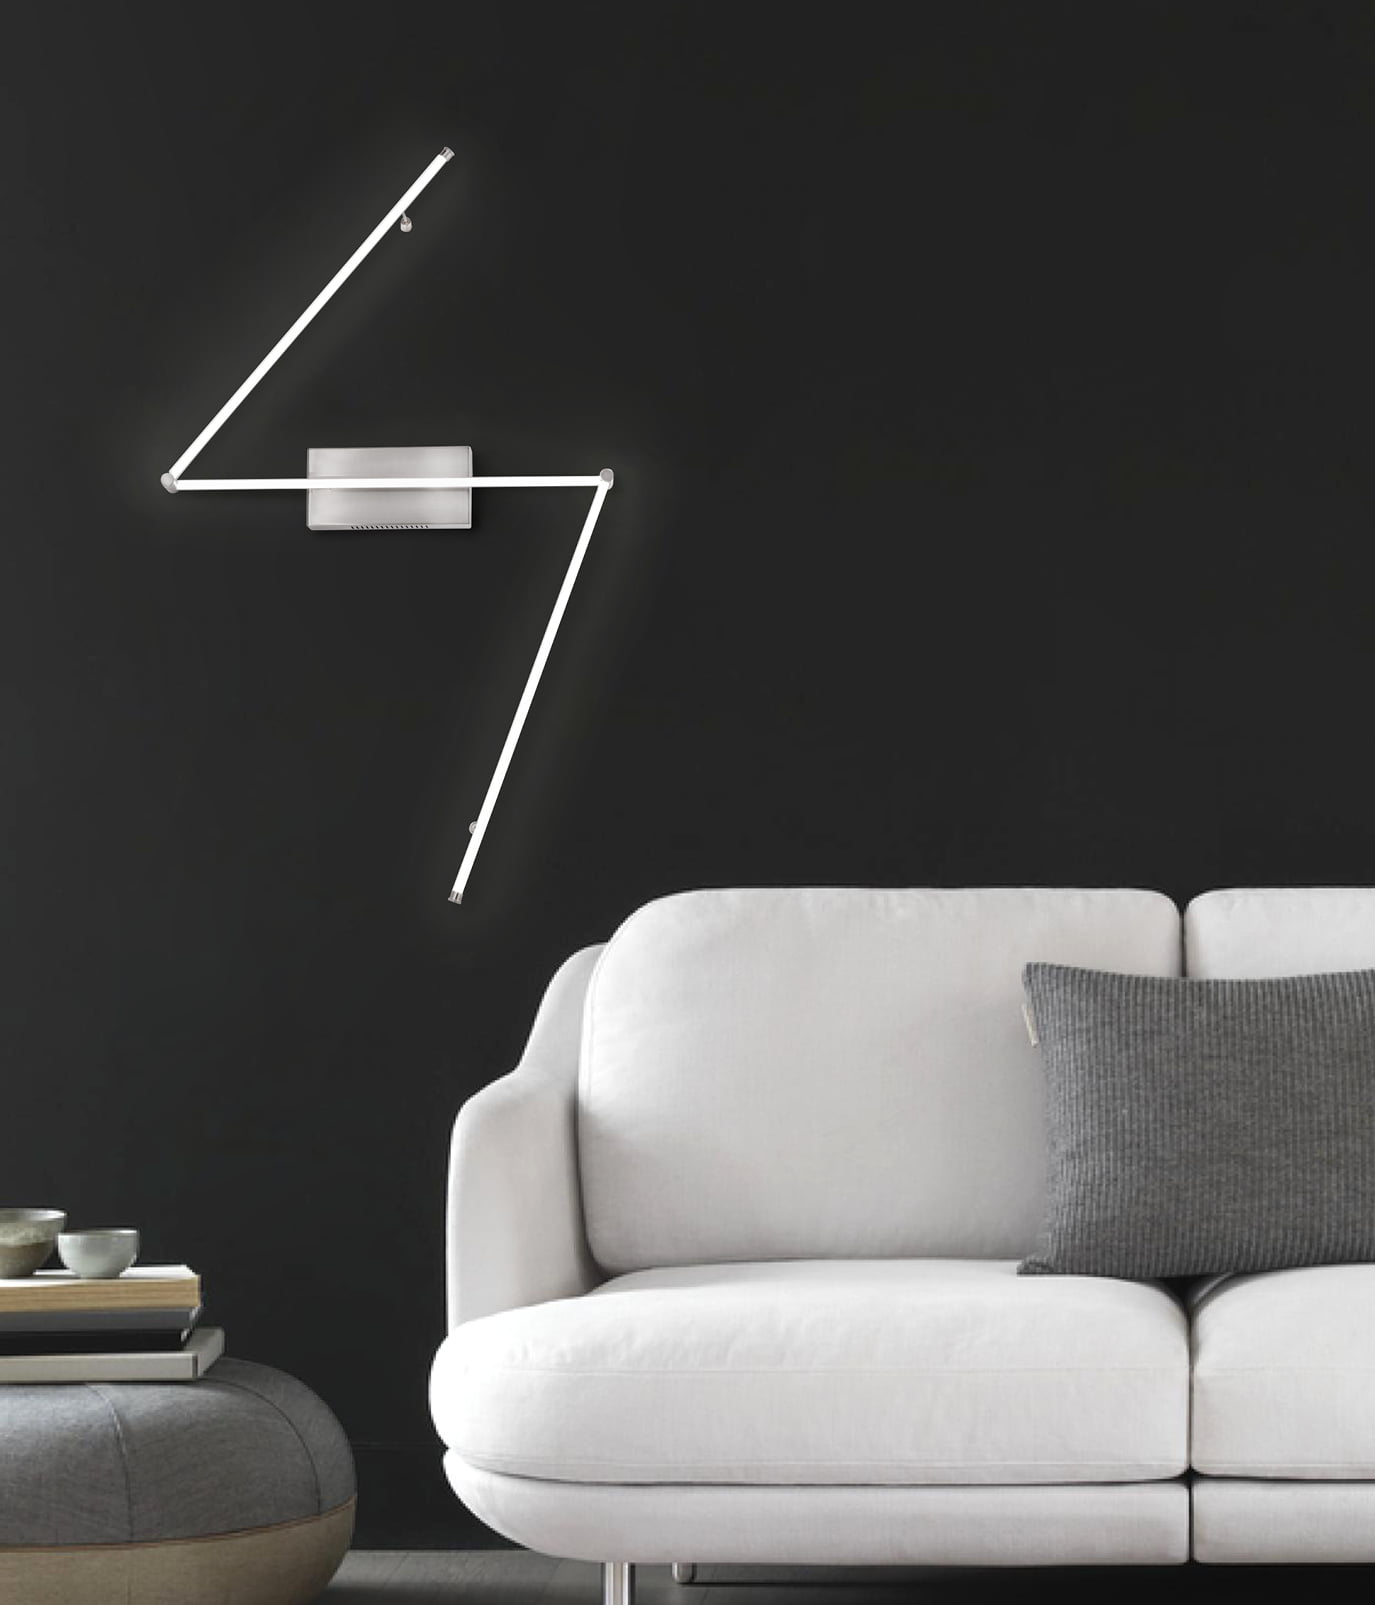 Flaven 4″ Hardwired Wall Sconce Wall Decor in Satin Nickel for Bedroom Livingroom Hallway Brass